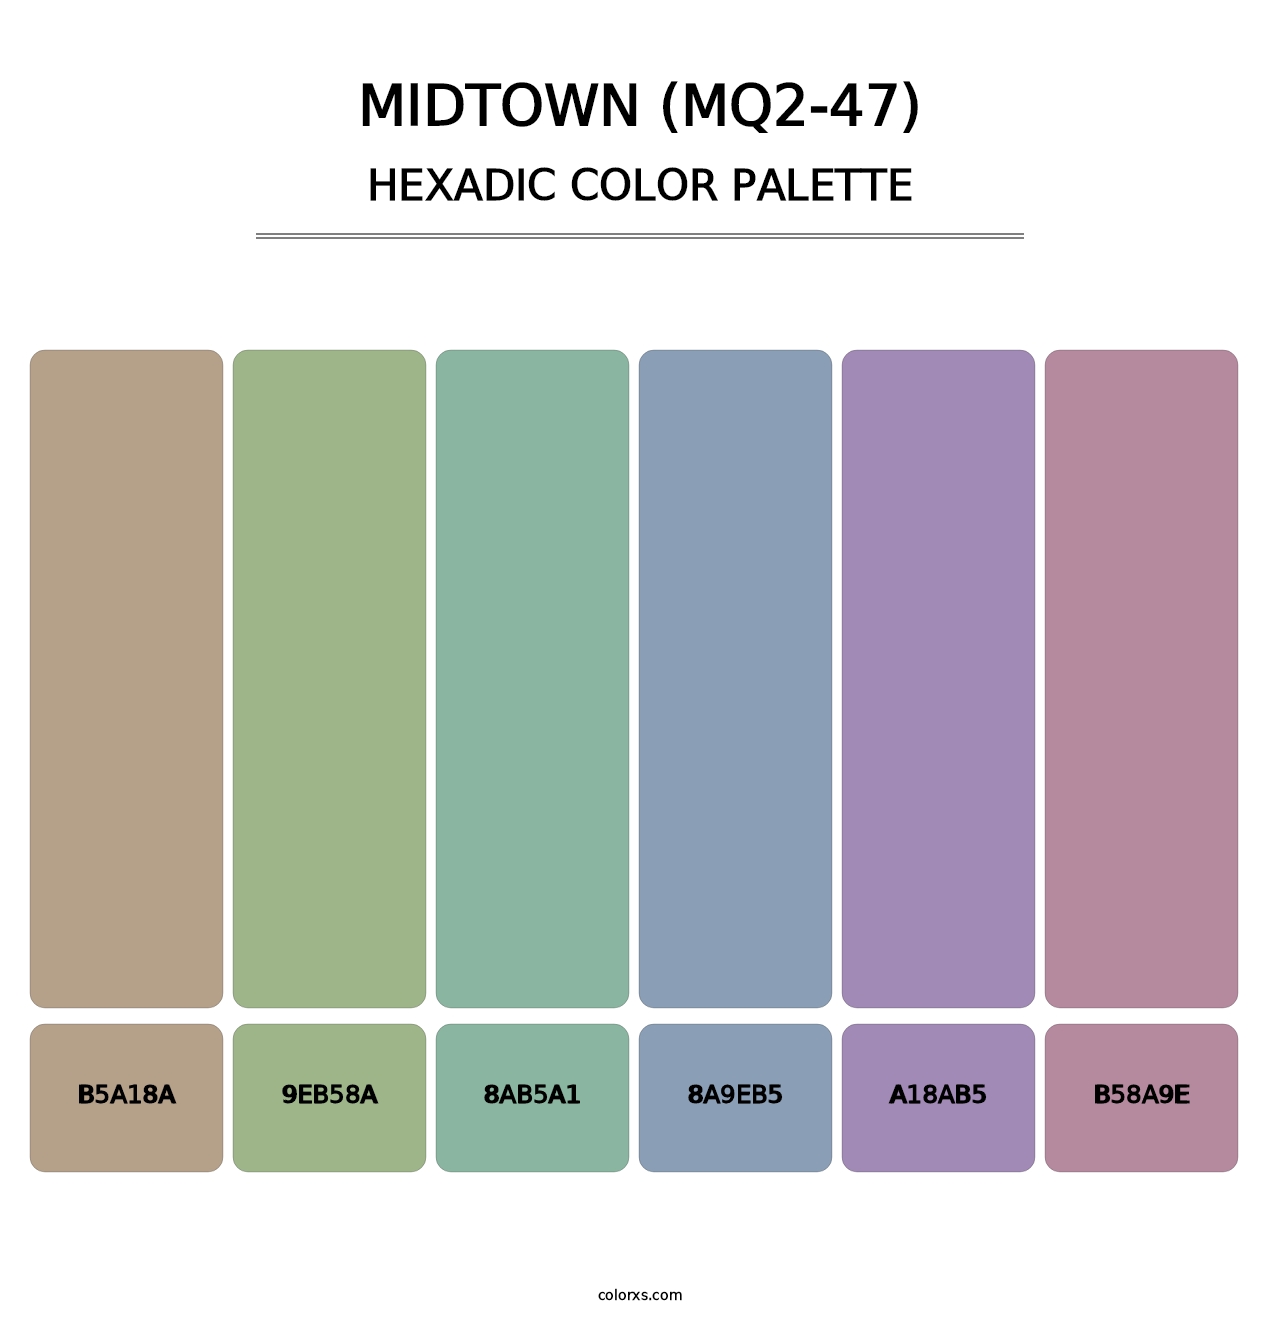 Midtown (MQ2-47) - Hexadic Color Palette